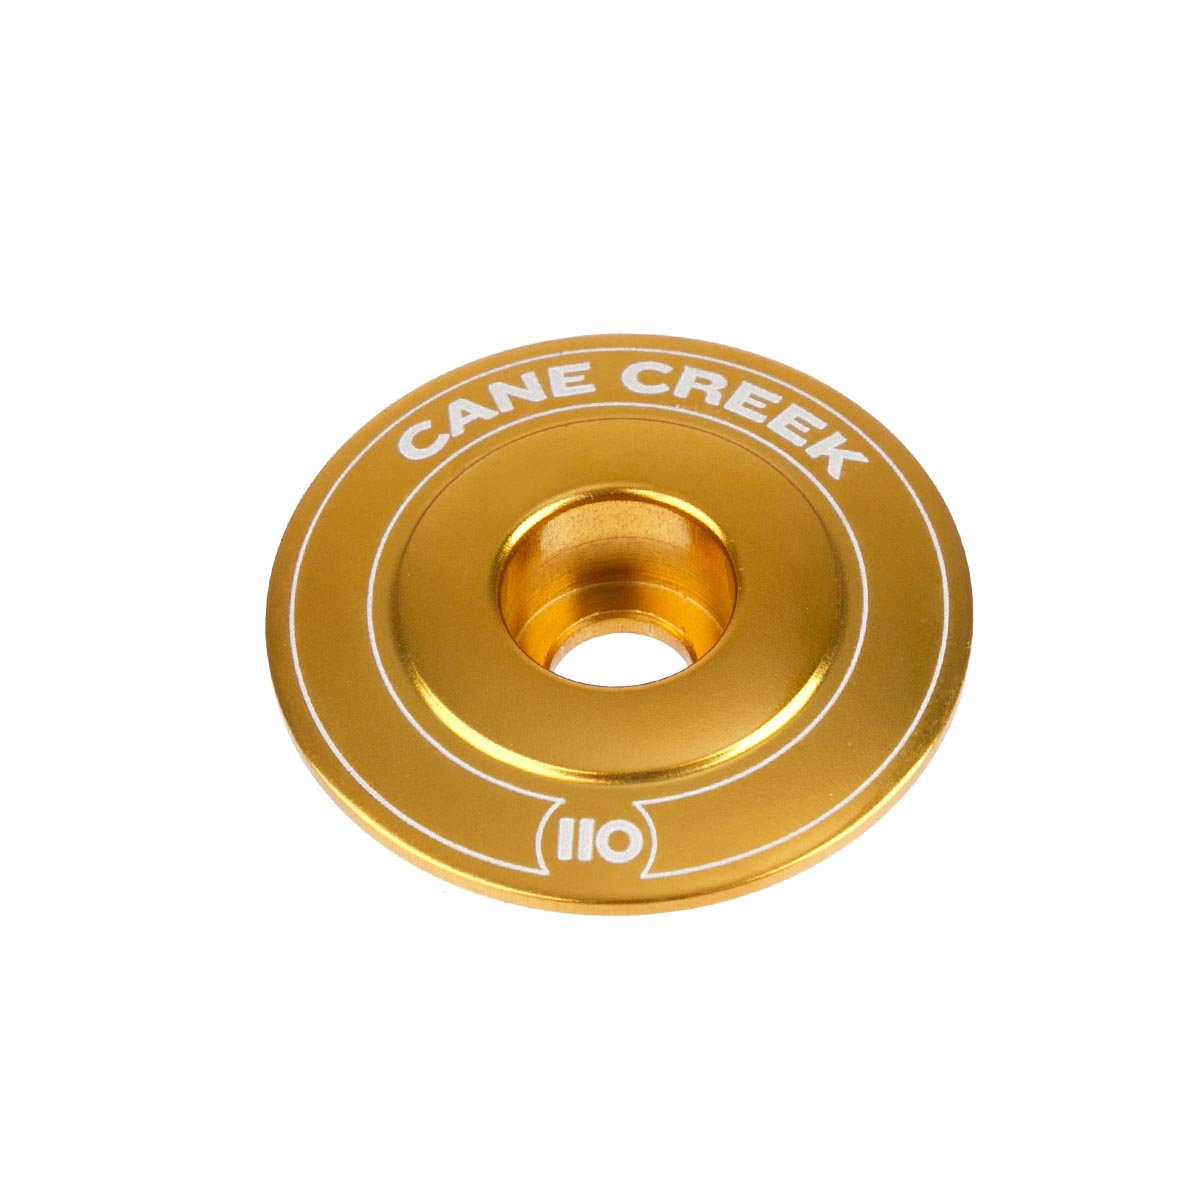 Cane Creek Ahead Cap 110 Gold, Aluminium, 1 1/8 Inch